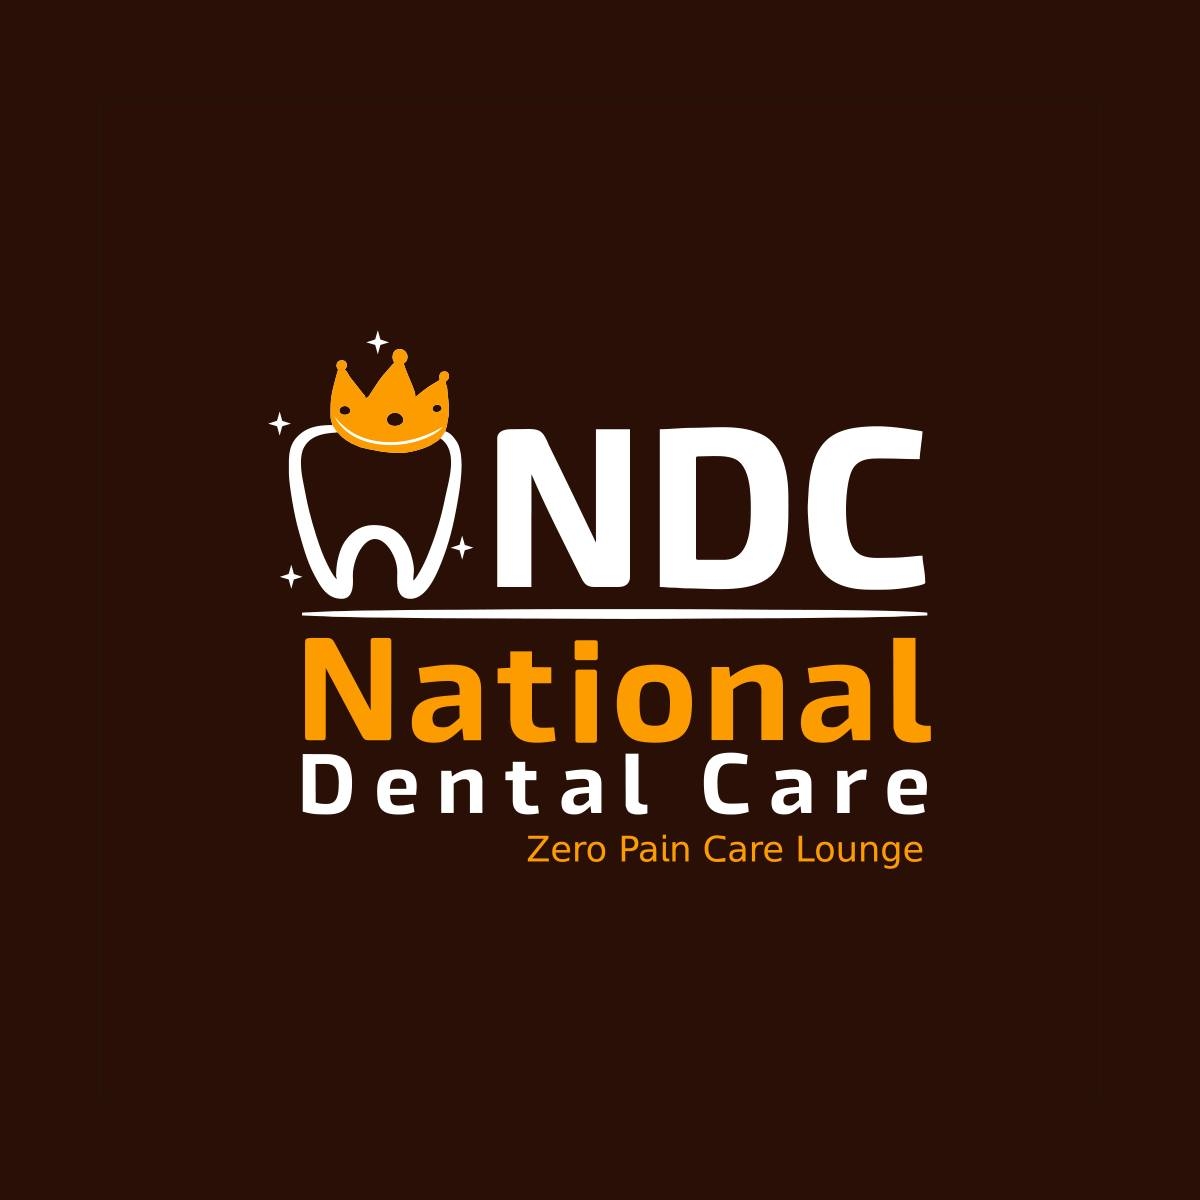 National Dental Care - Best Dental Clinic in Nallagandla